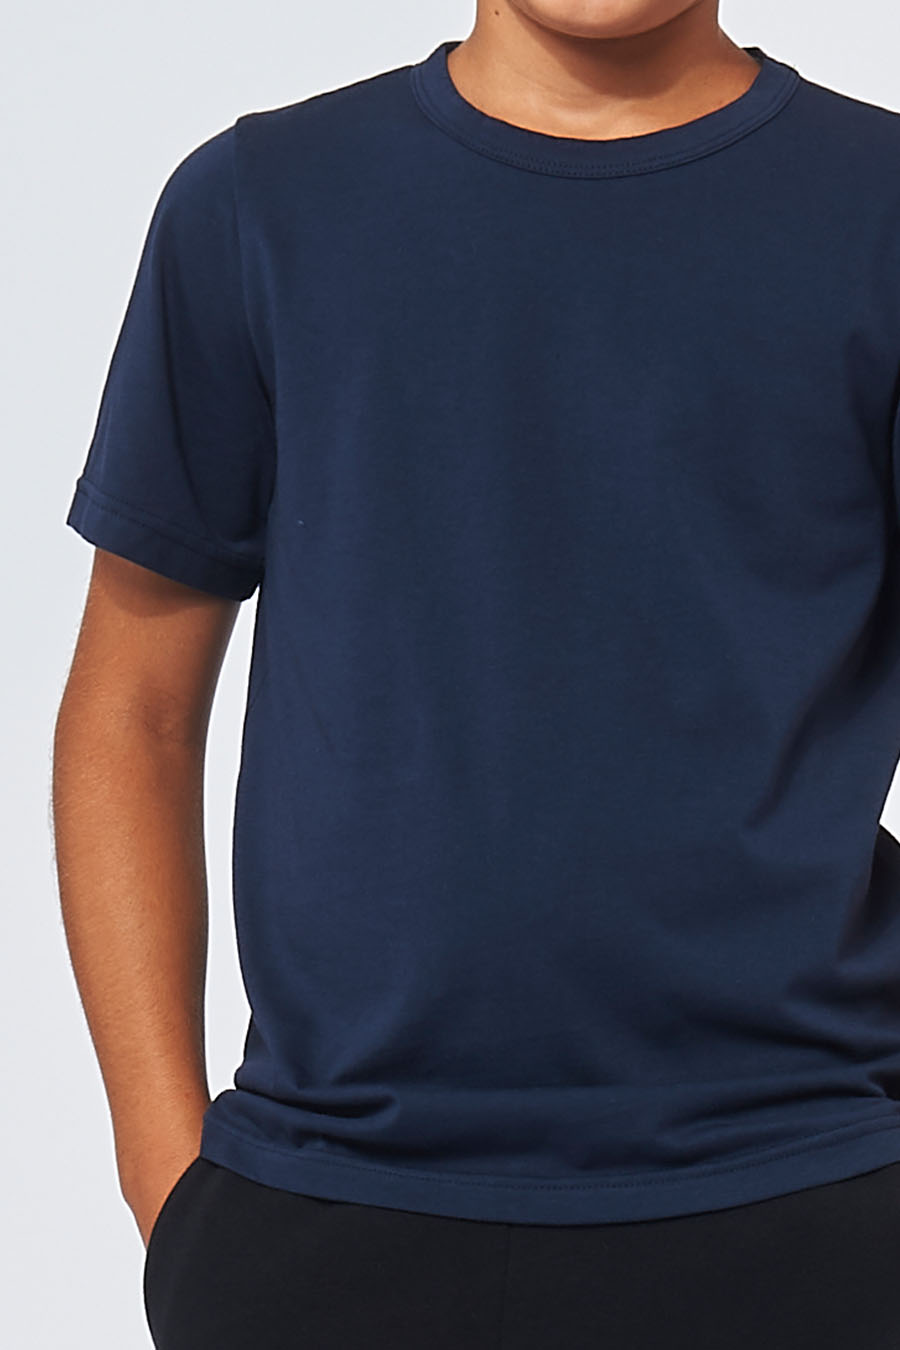 zoom tee-shirt garçon made in France en coton bio AUGUST marine - FIL ROUGE